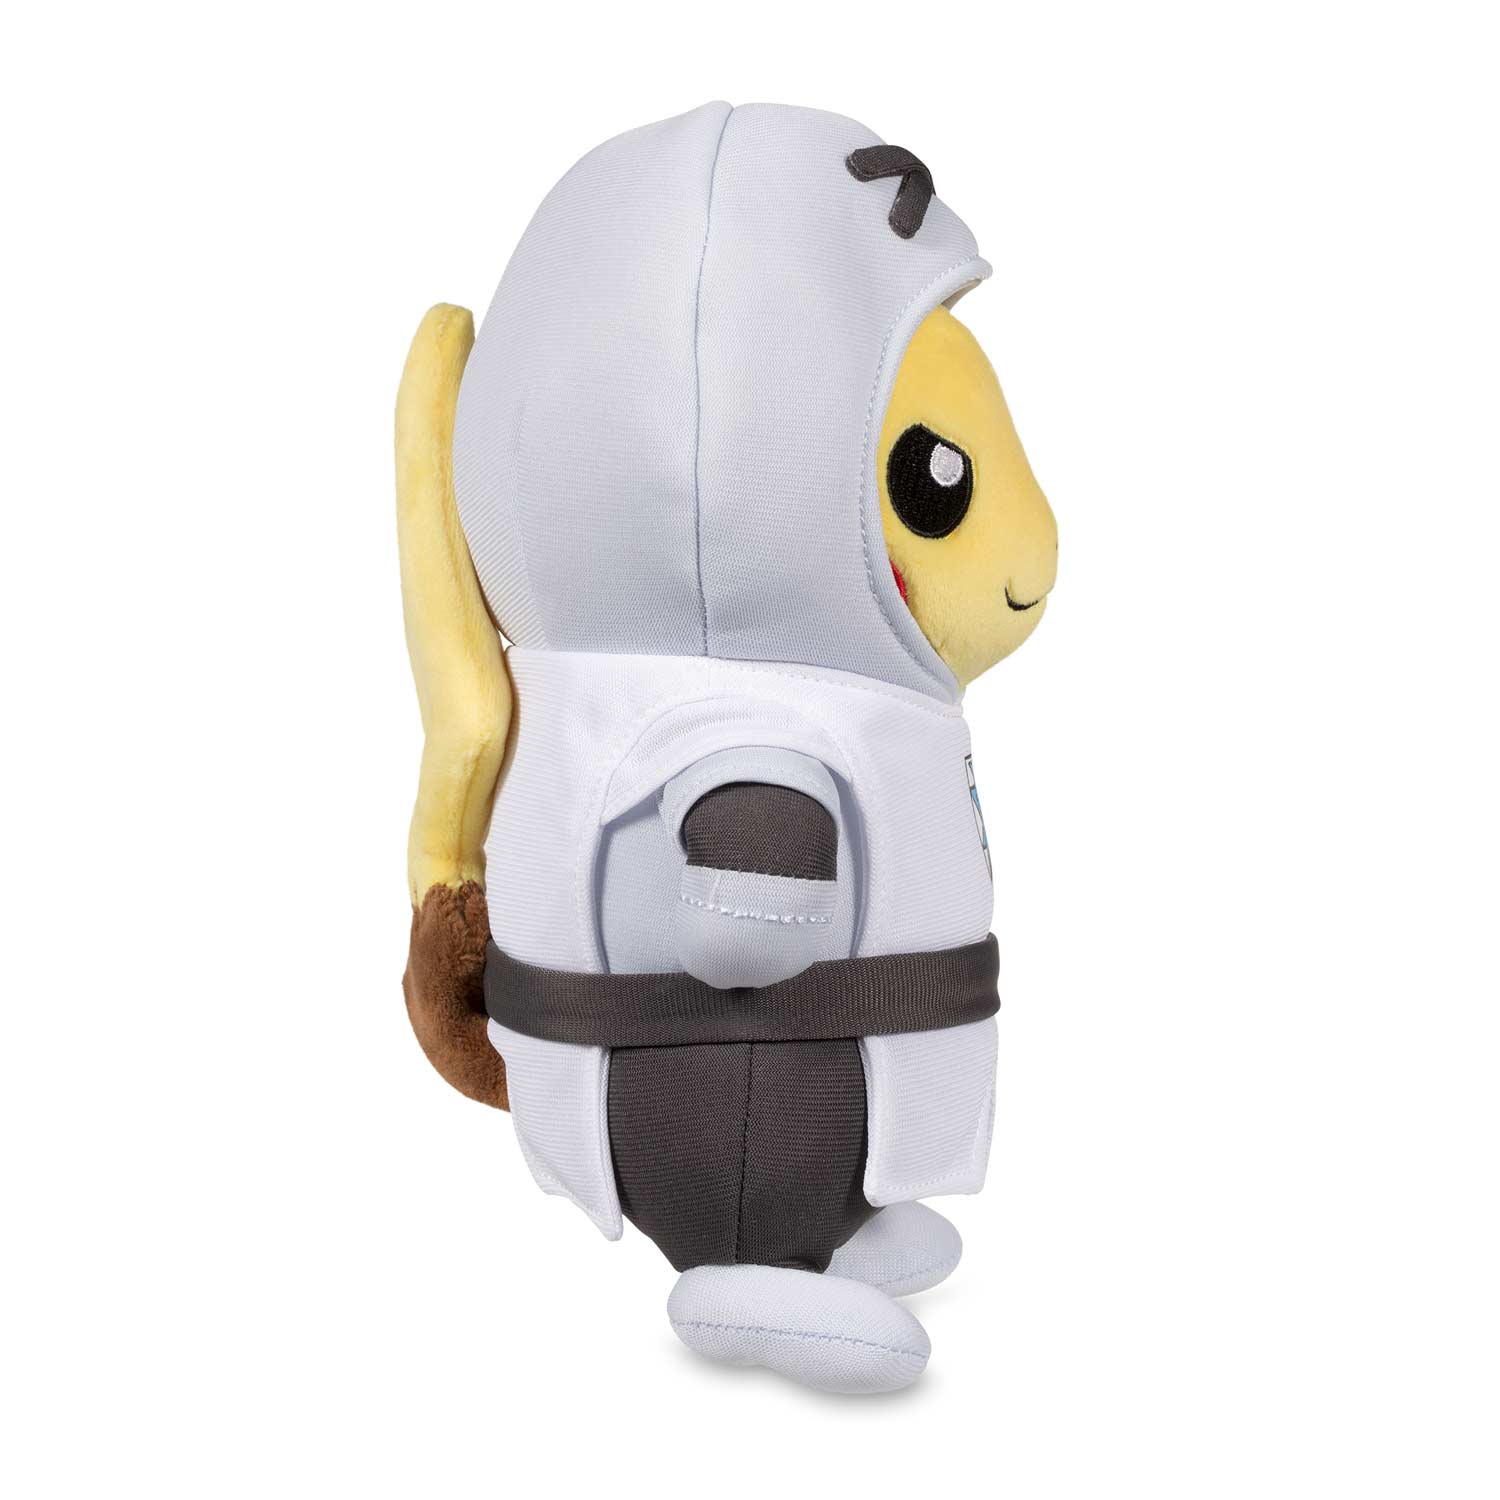 Pokemon Pikachu in Team Plasma Costume Plush Soft Toy Stuffed Doll 8.5"